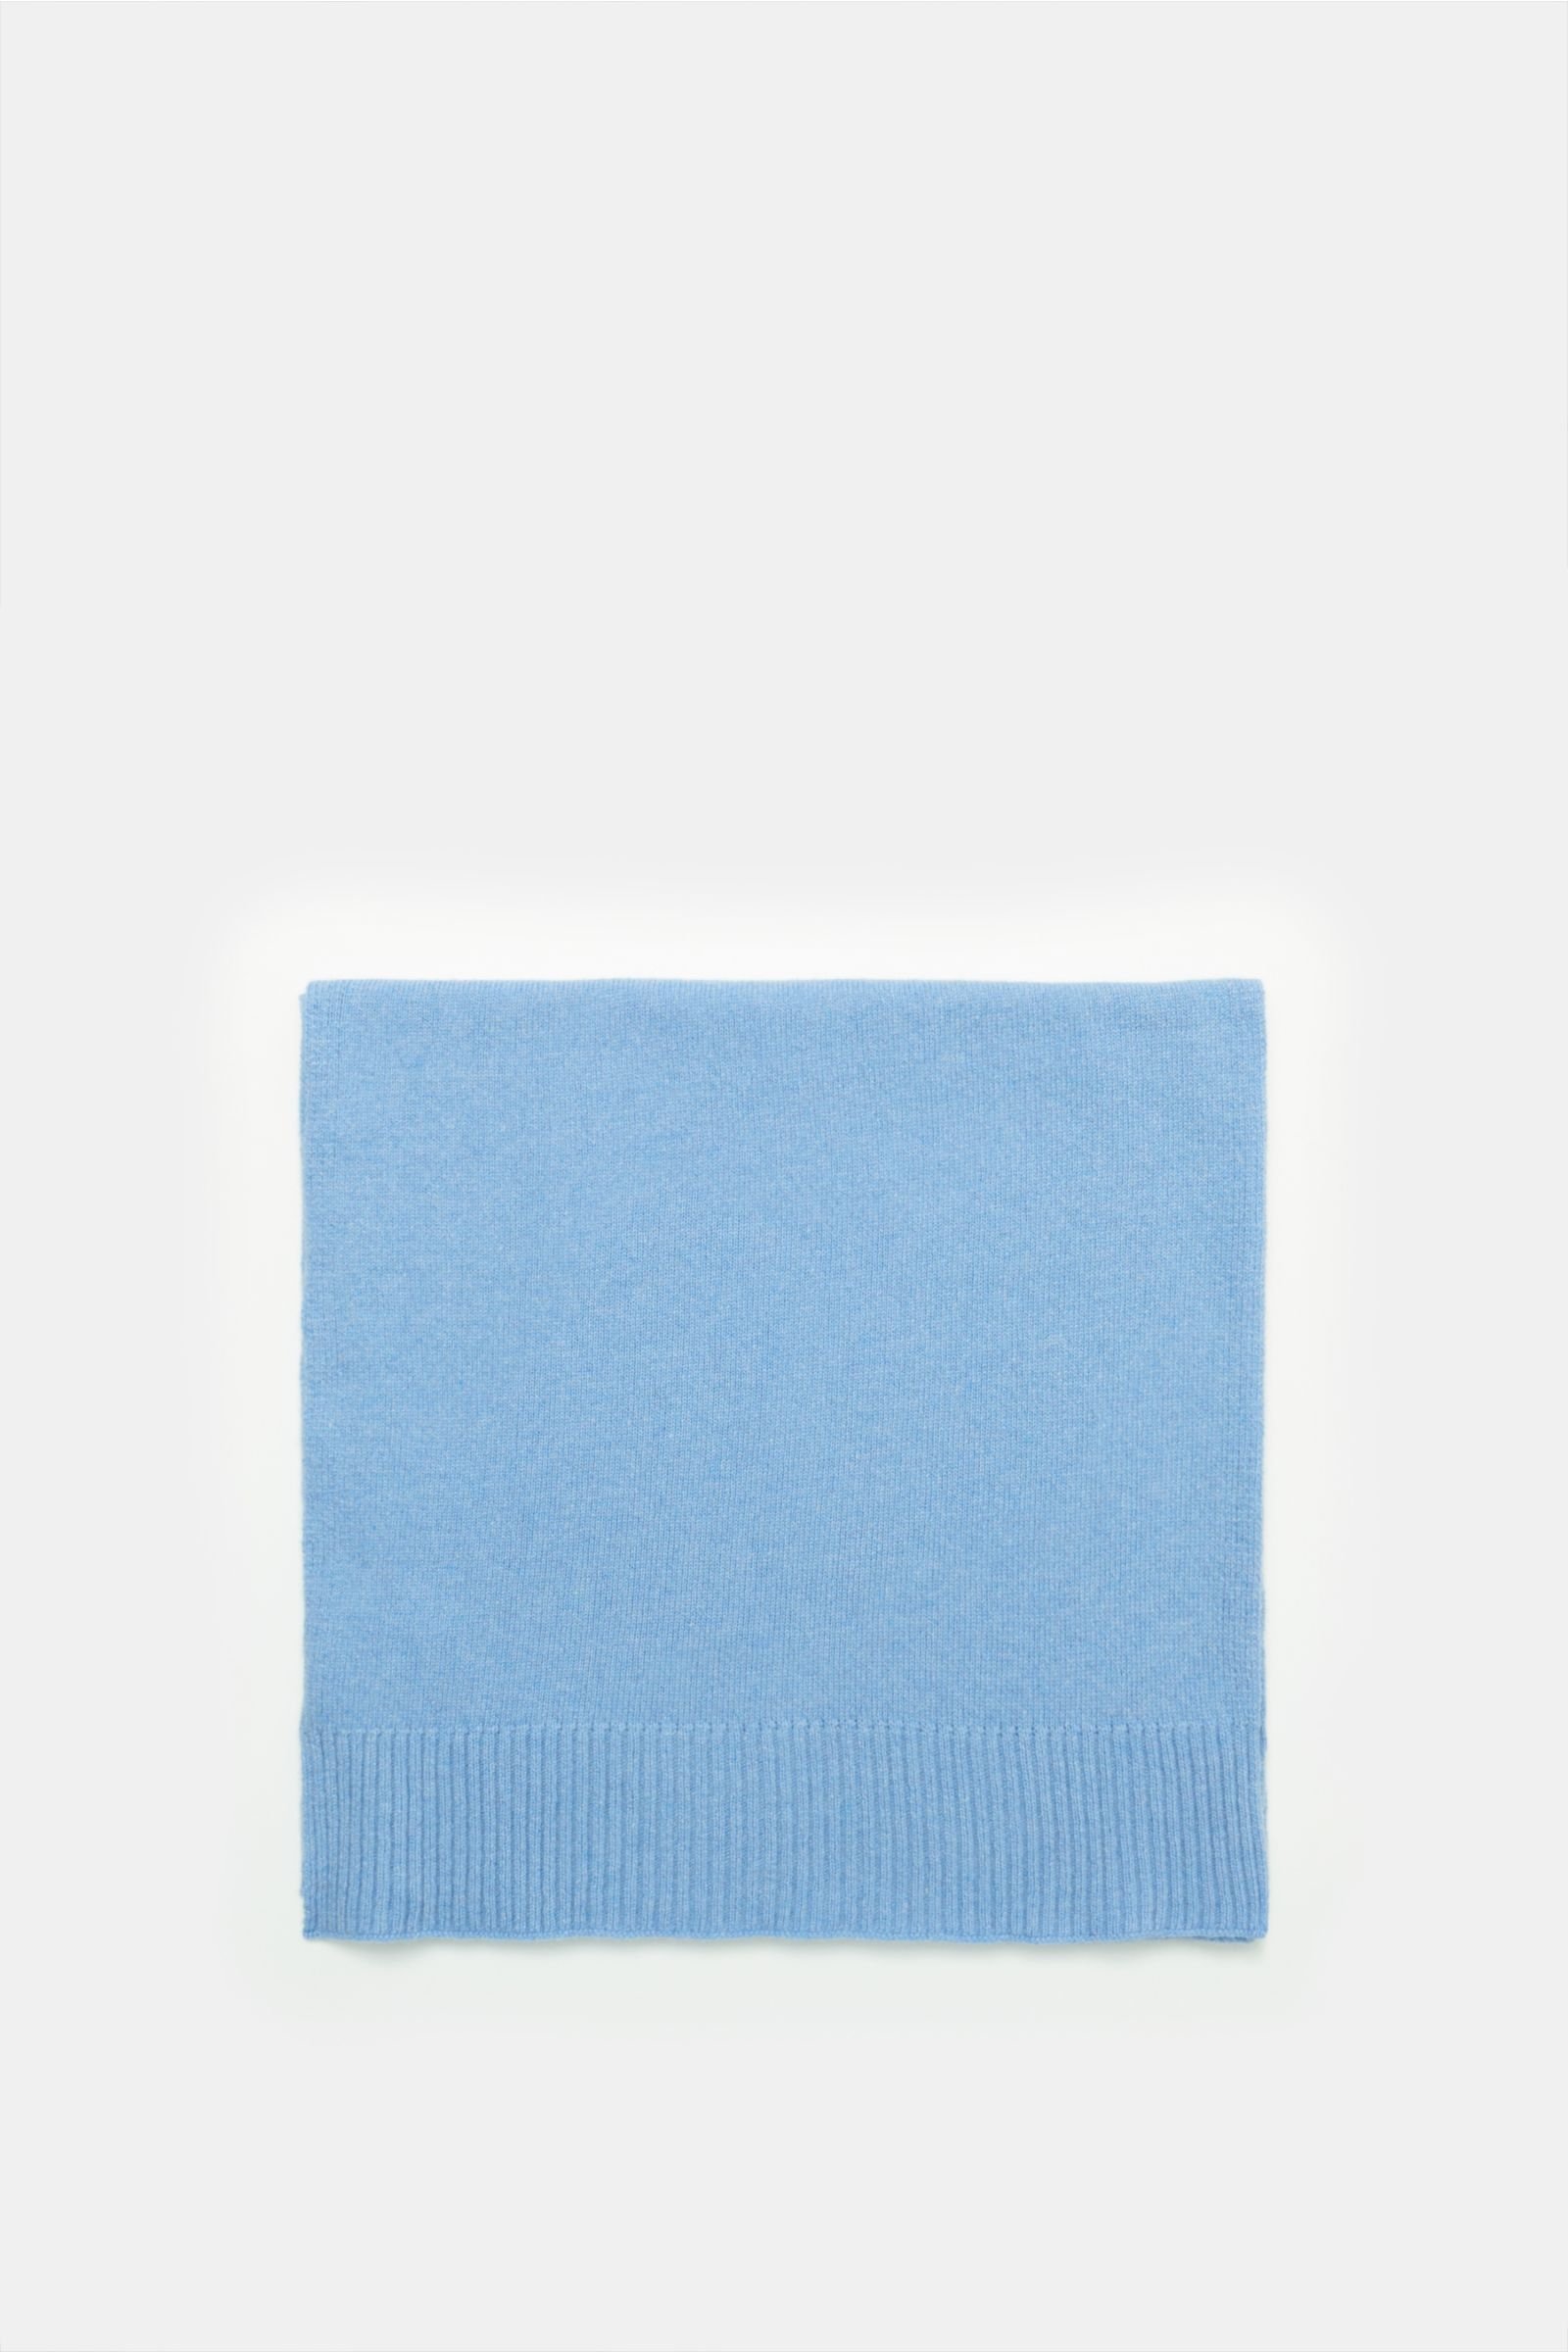 Cashmere scarf light blue